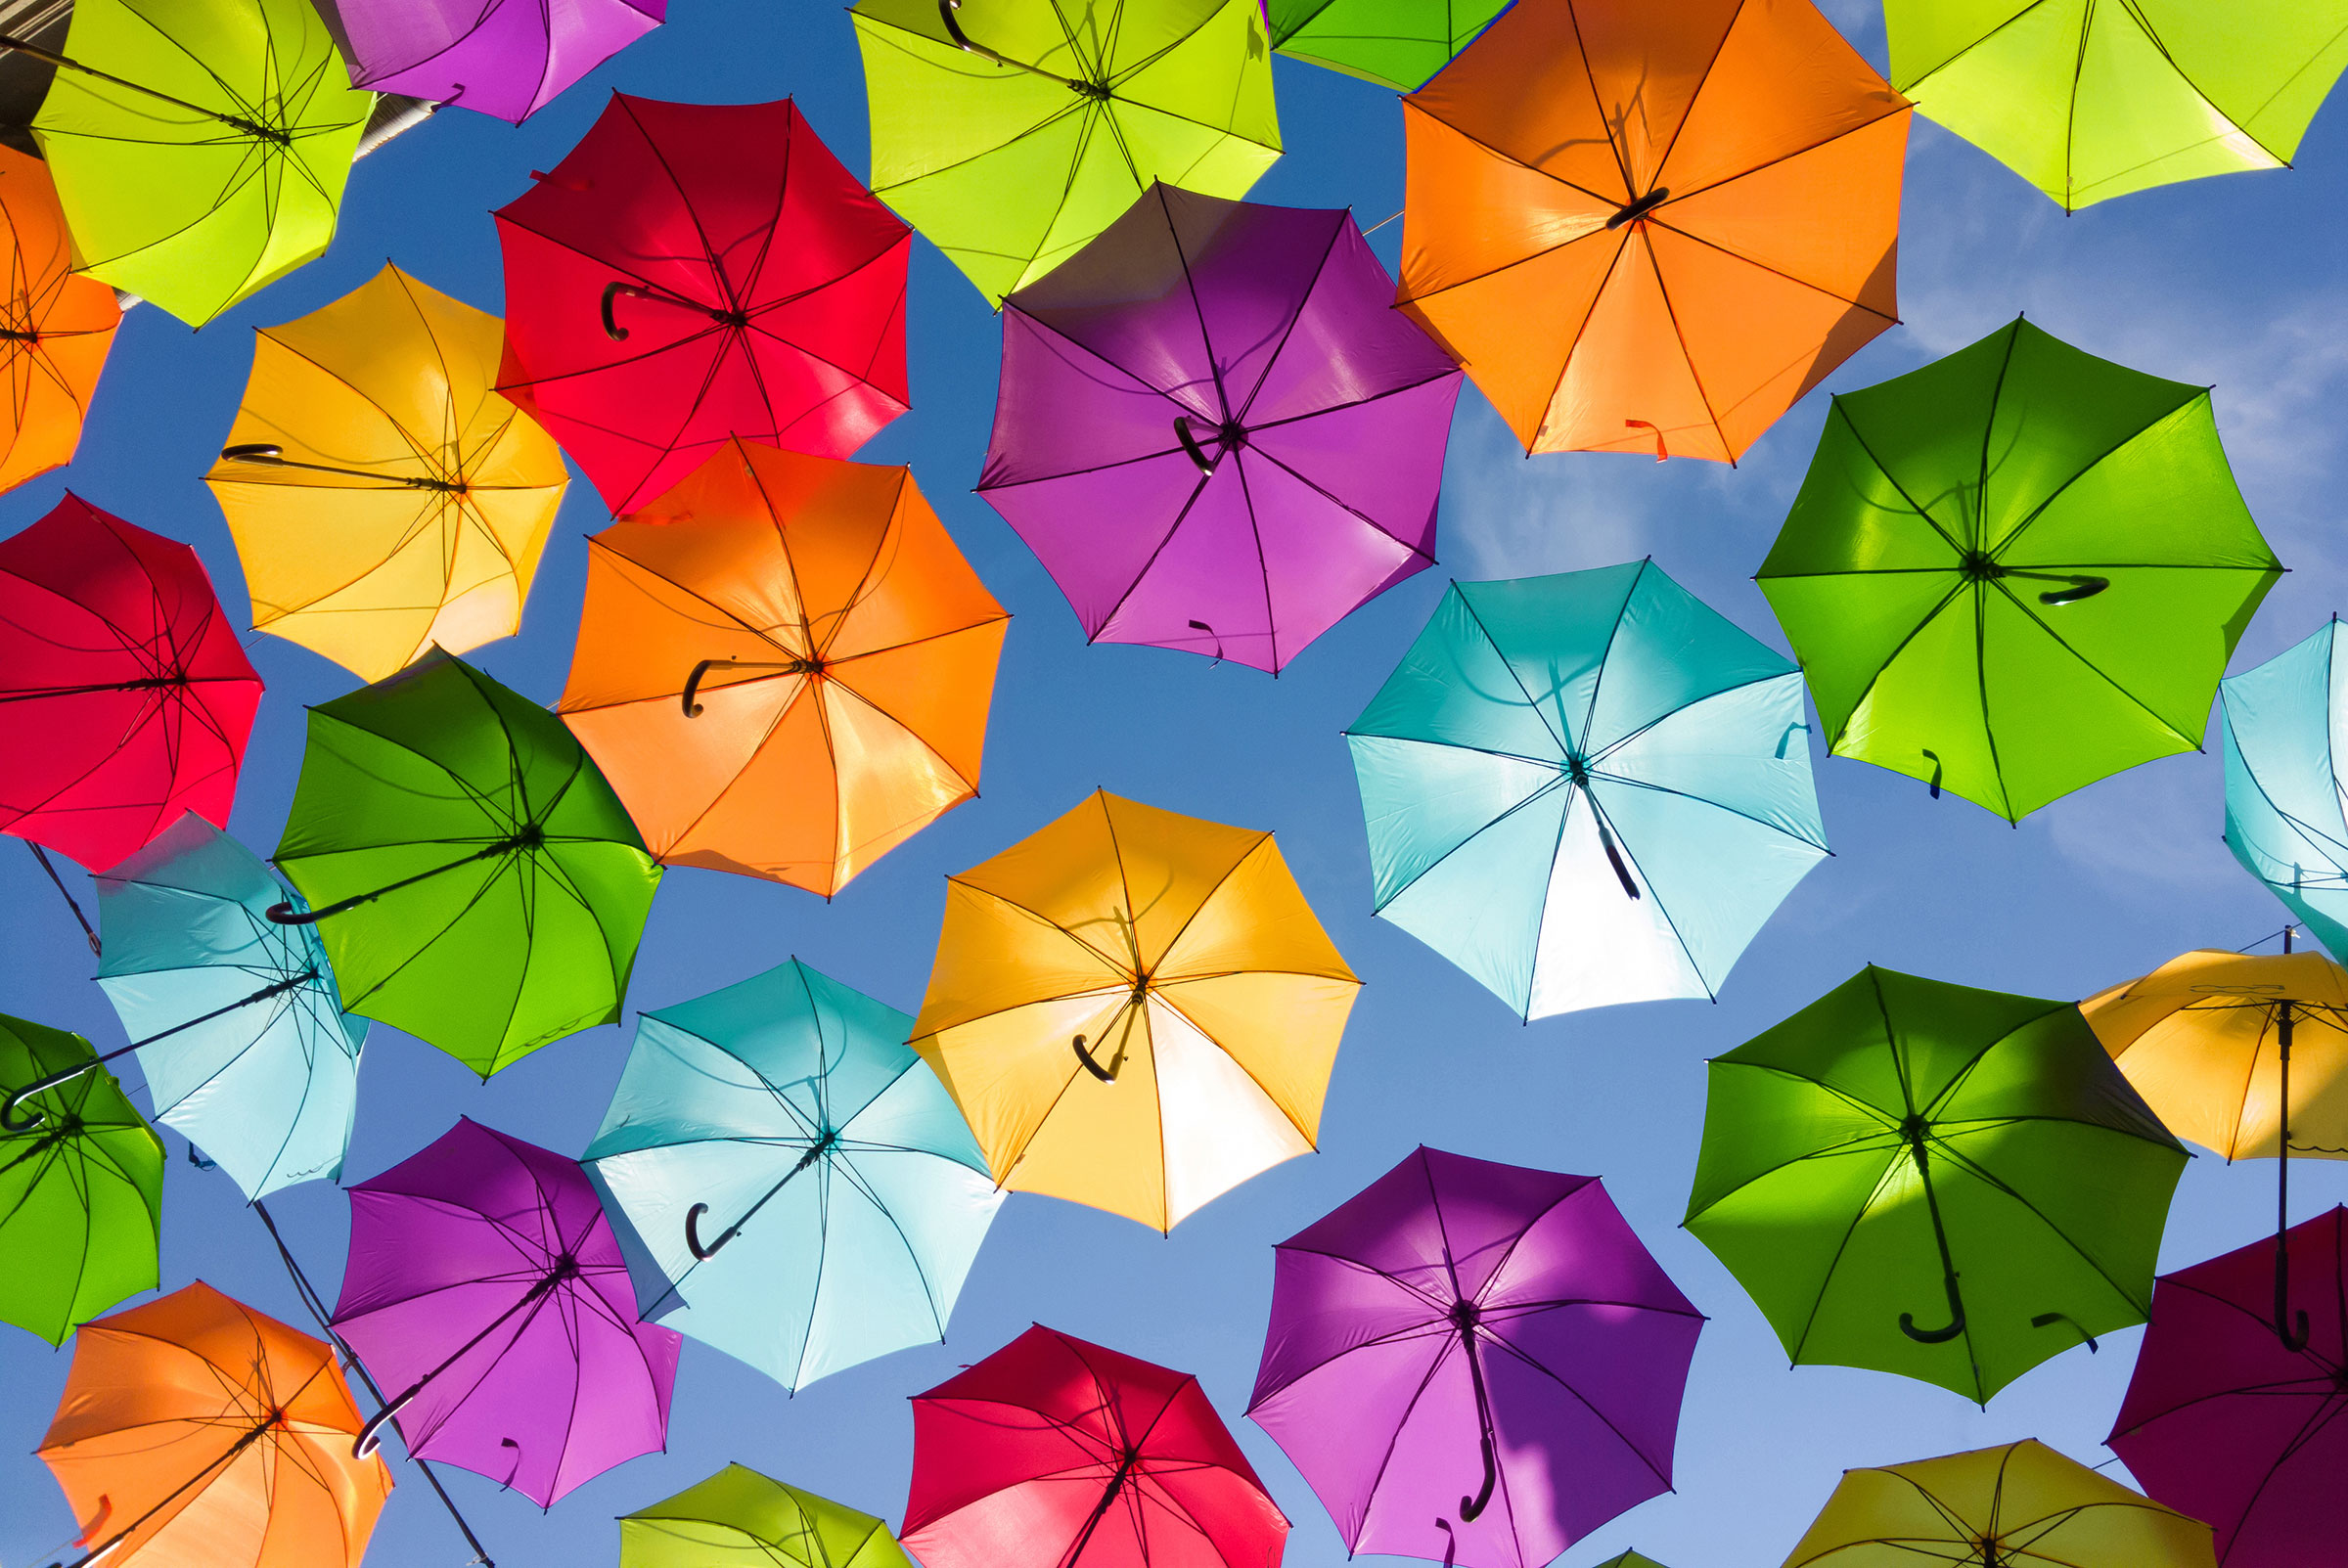 Colorful-umbrellas-in-the-sky